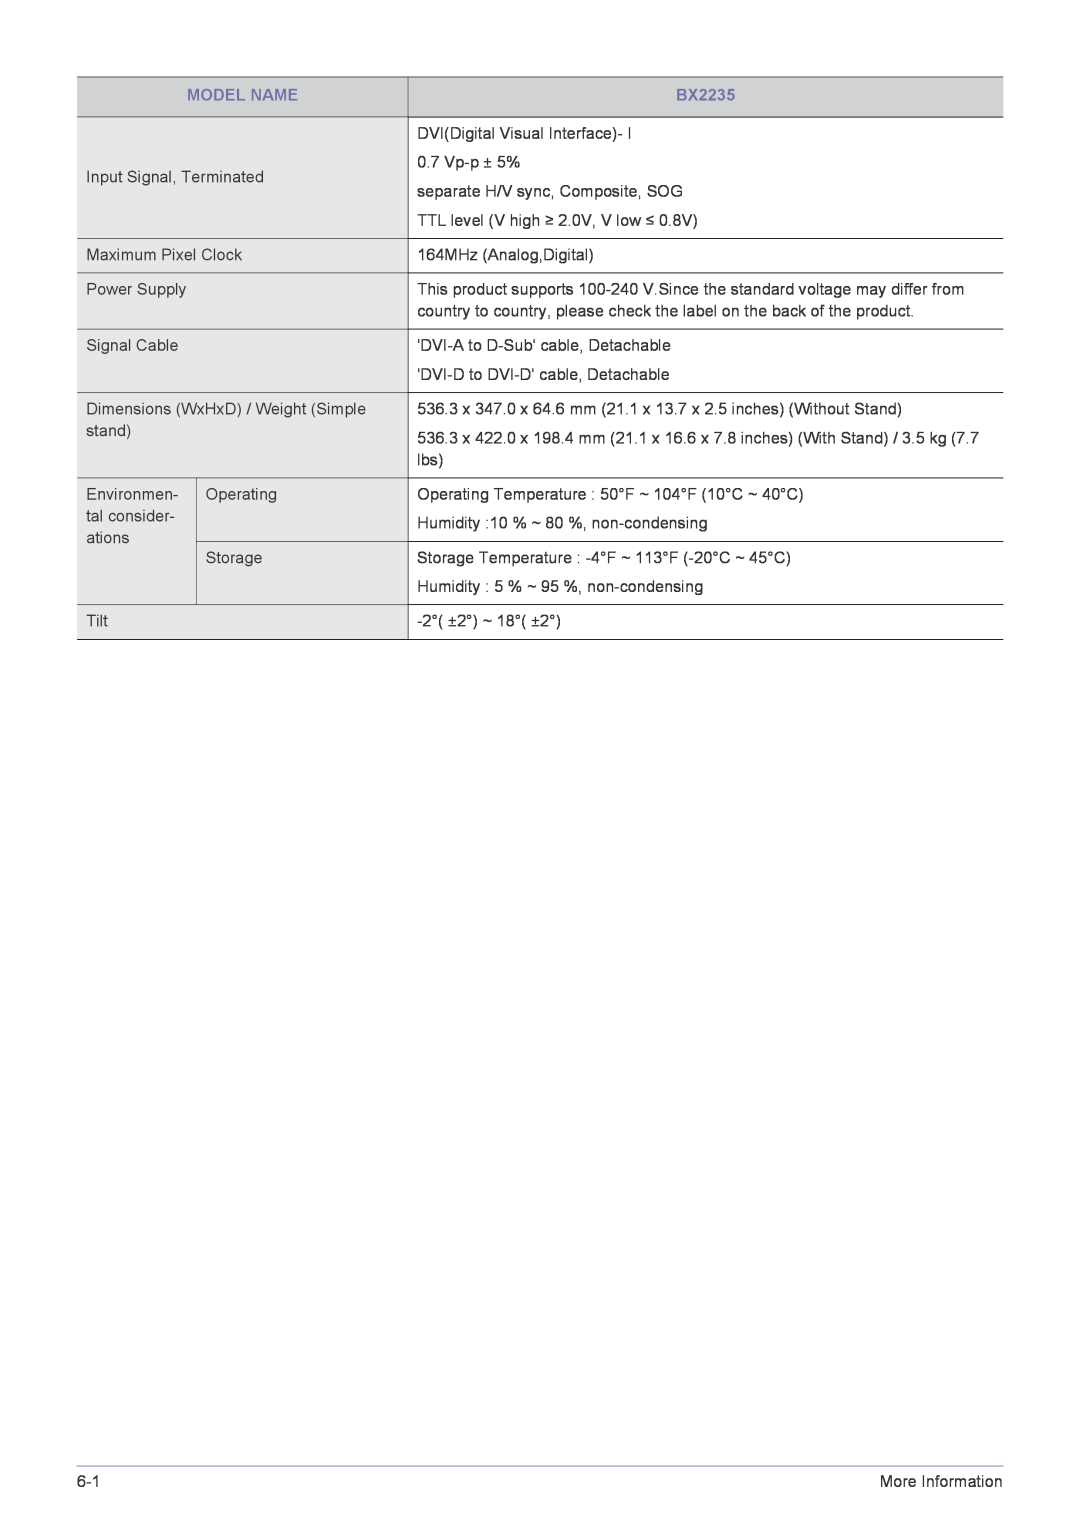 Samsung BX2035 user manual Model Name, BX2235, More Information 